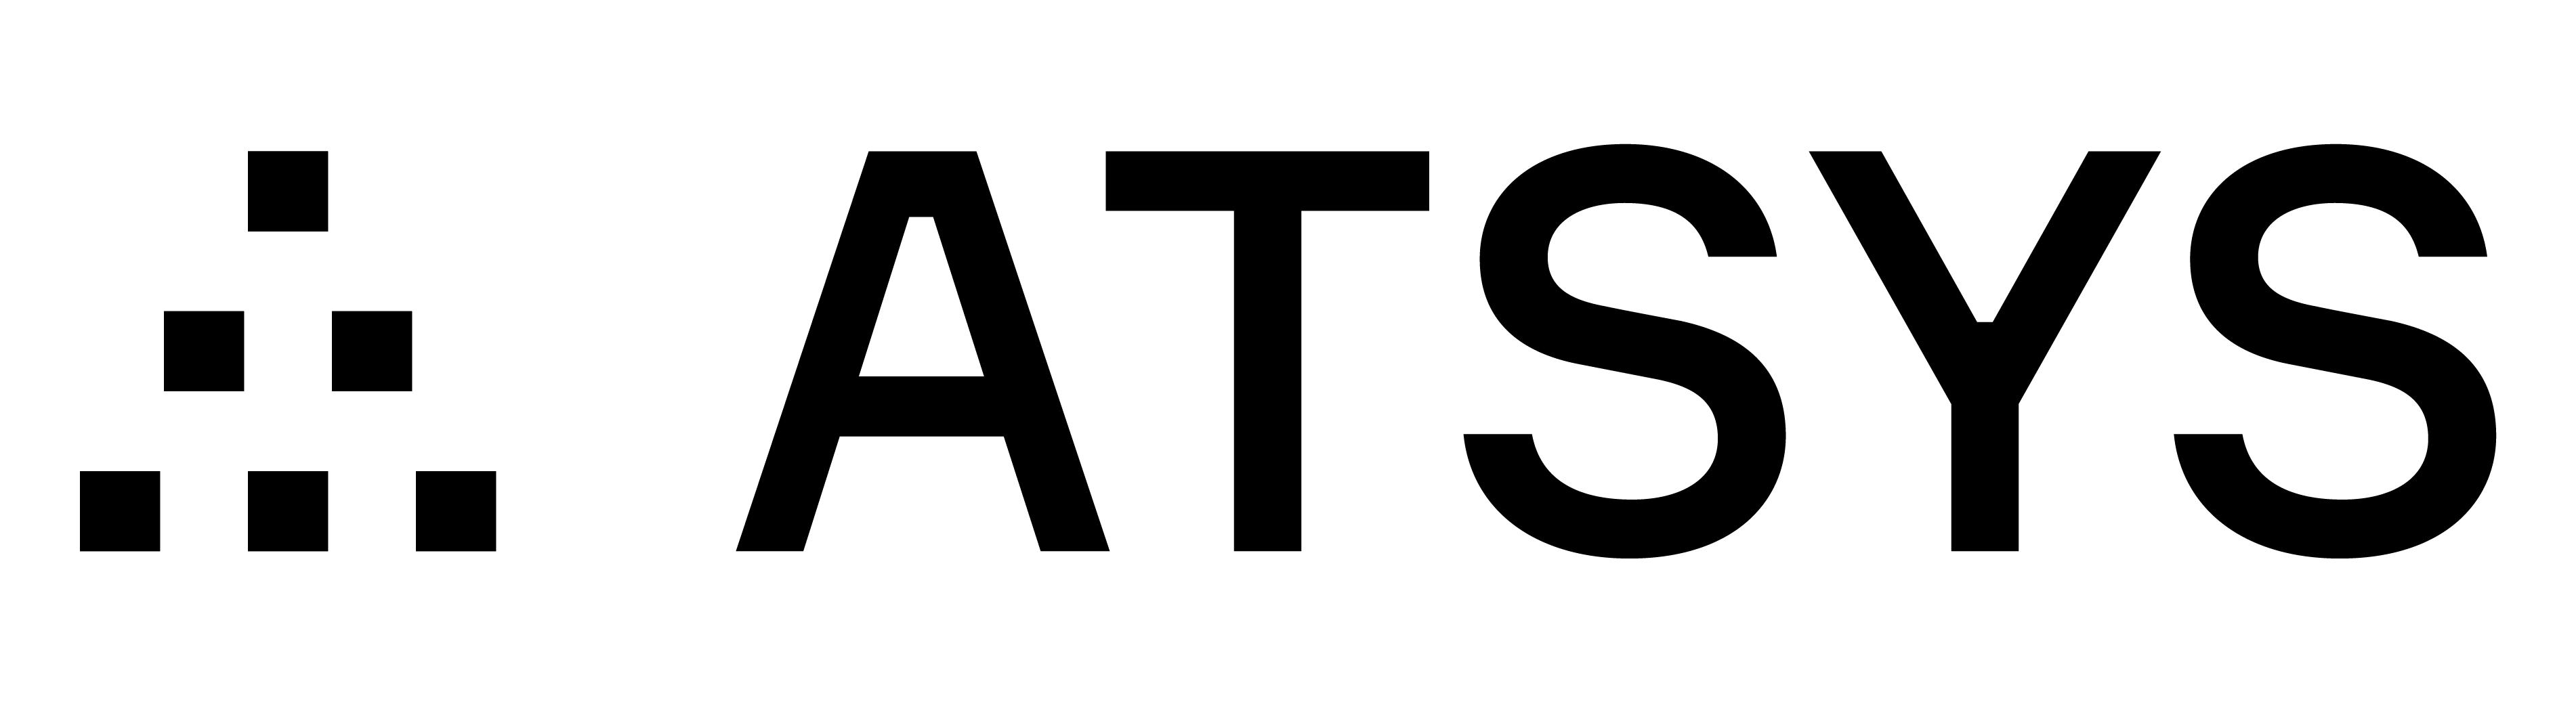 ATSYS001_Logo_Screen_Horizontal_Optical_BlackandWhite